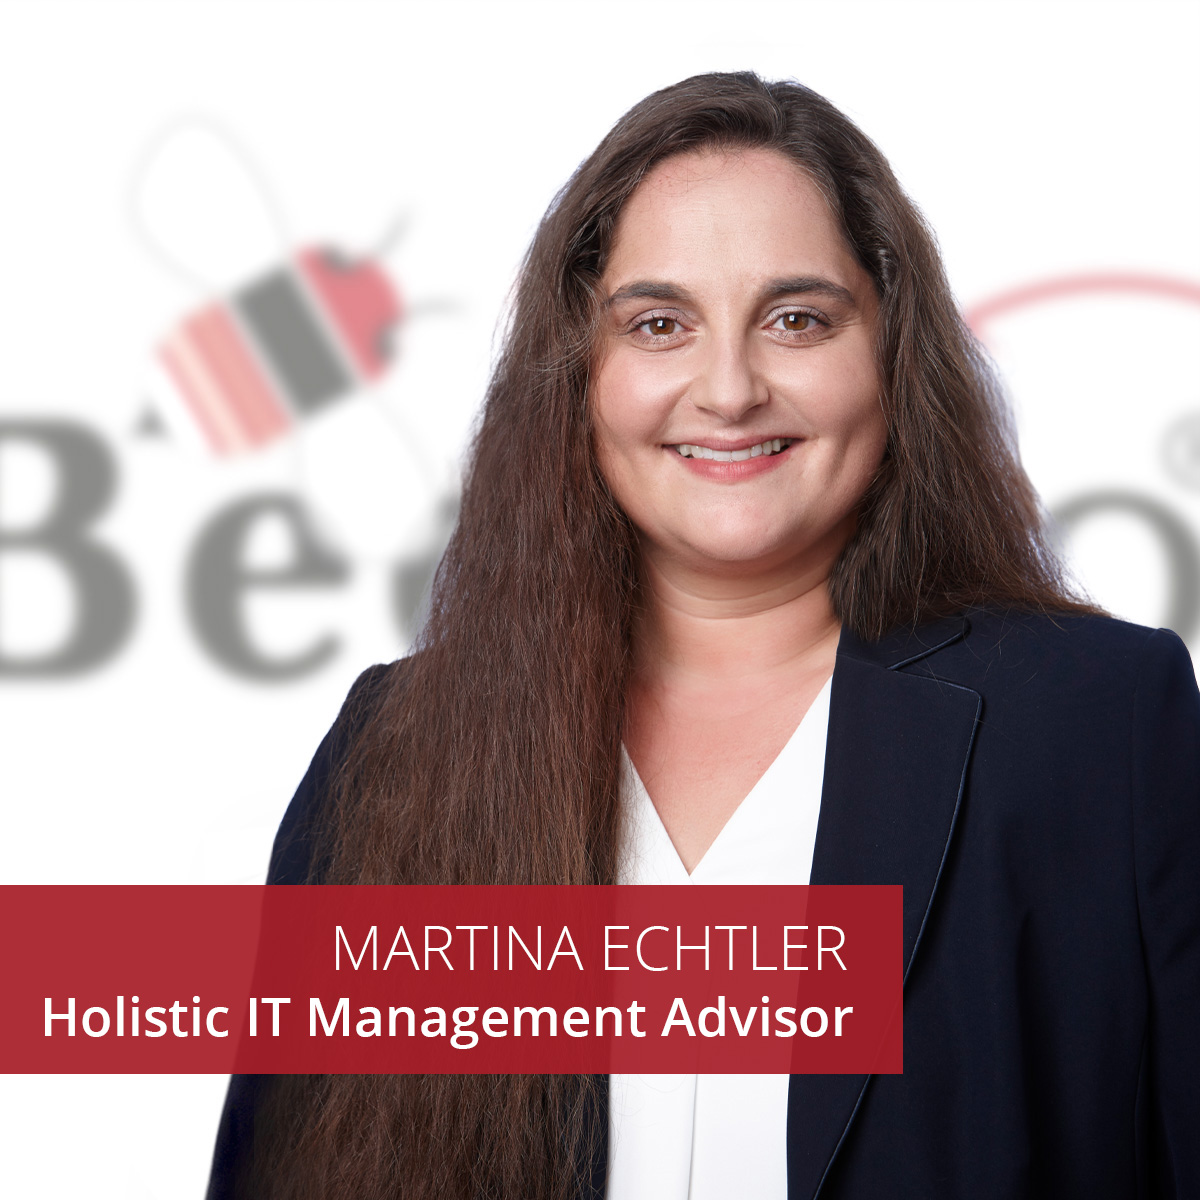 Echtler Martina Bee360 Holistic IT Management Advisor 1200x1200 1